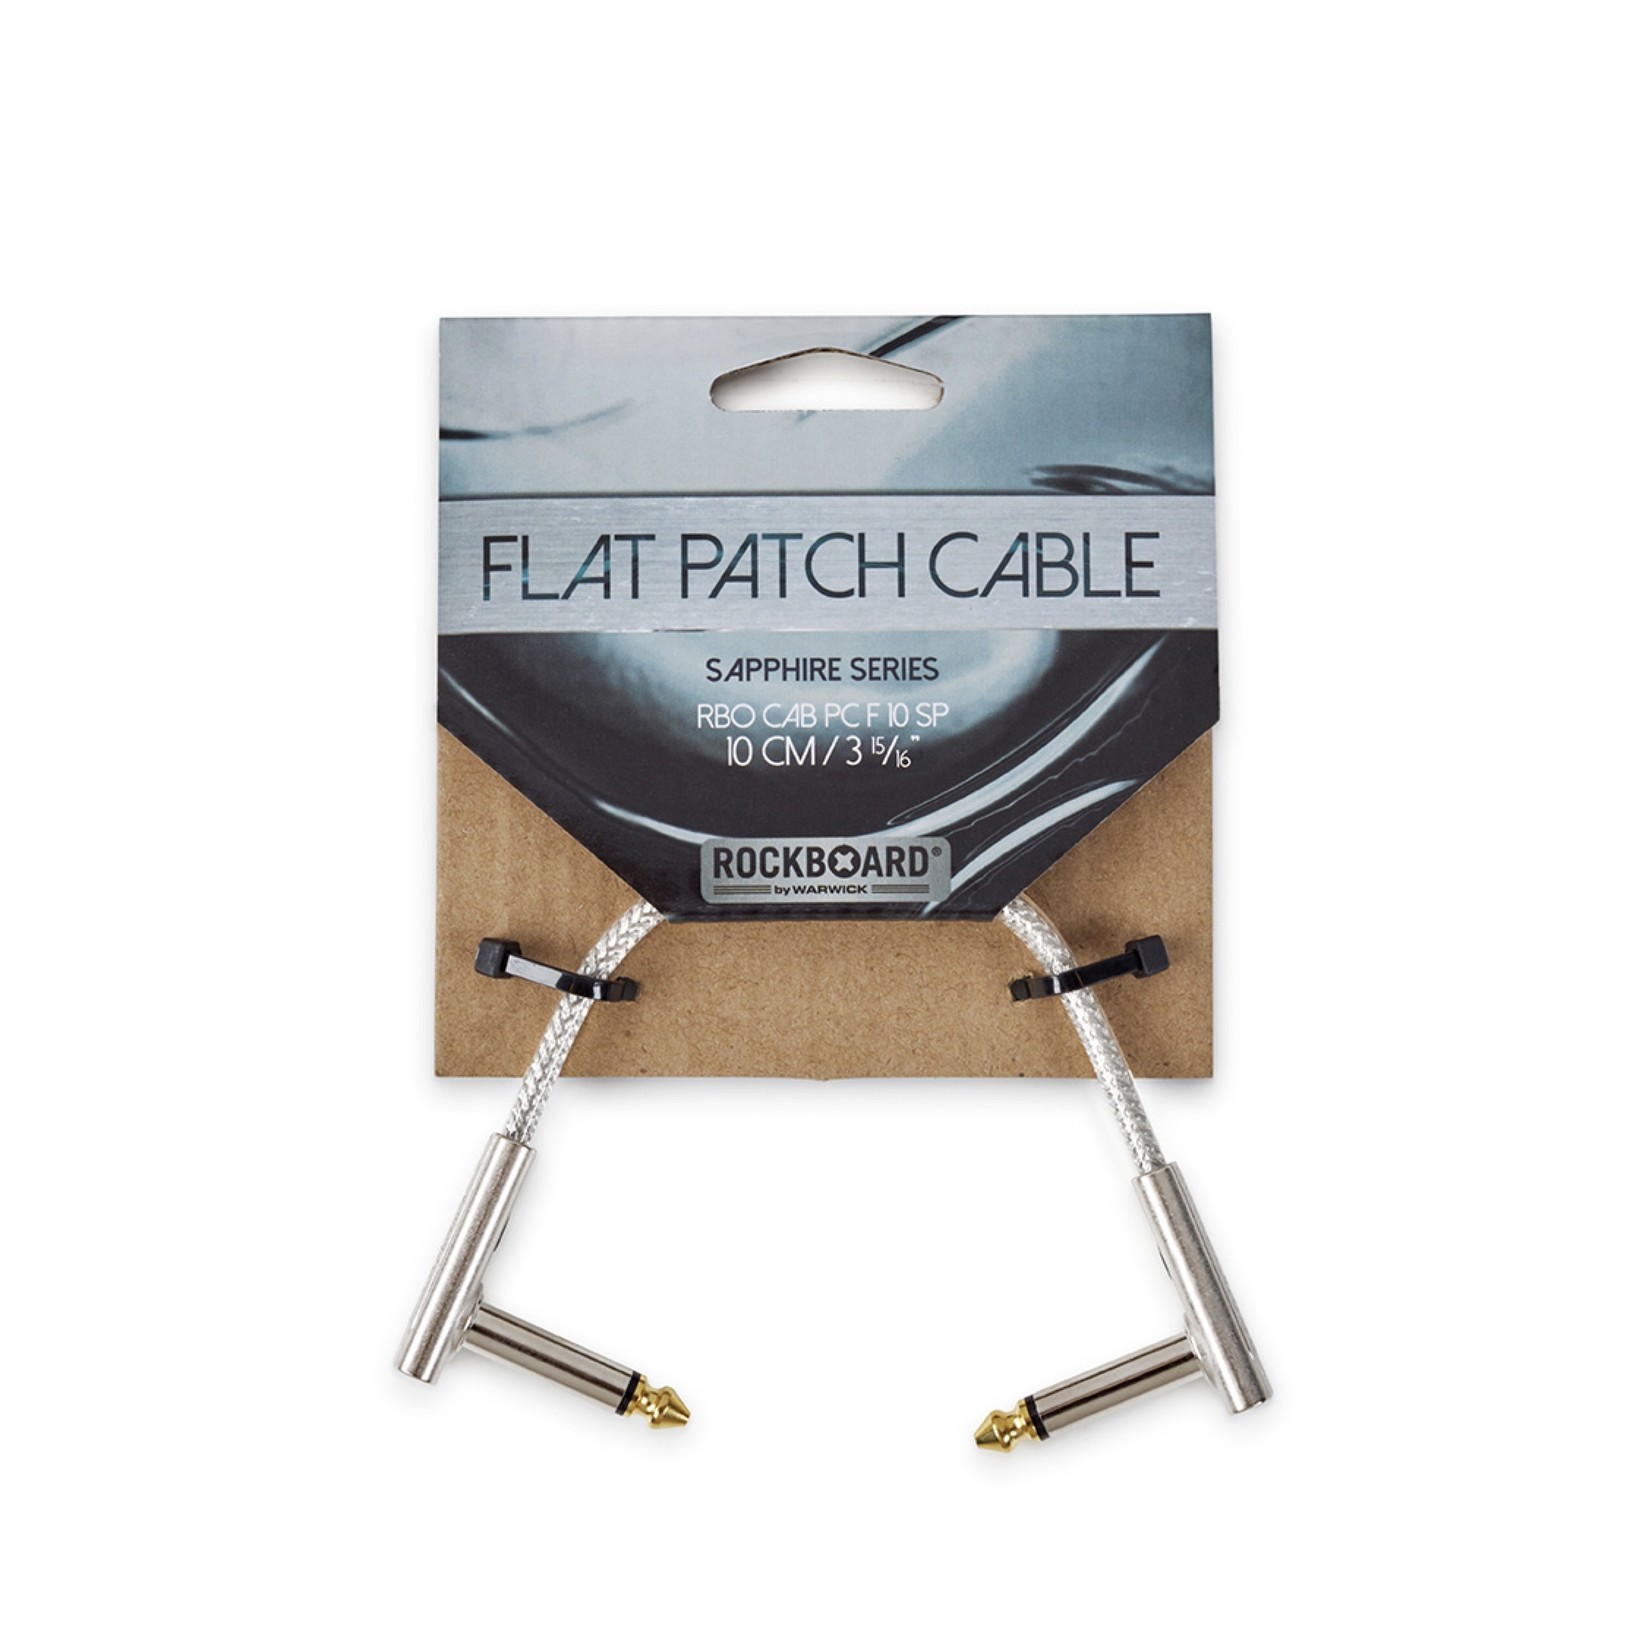 Rockboard RockBoard Flat Patch Cable - Sapphire Series, 10 cm (3 15/16")